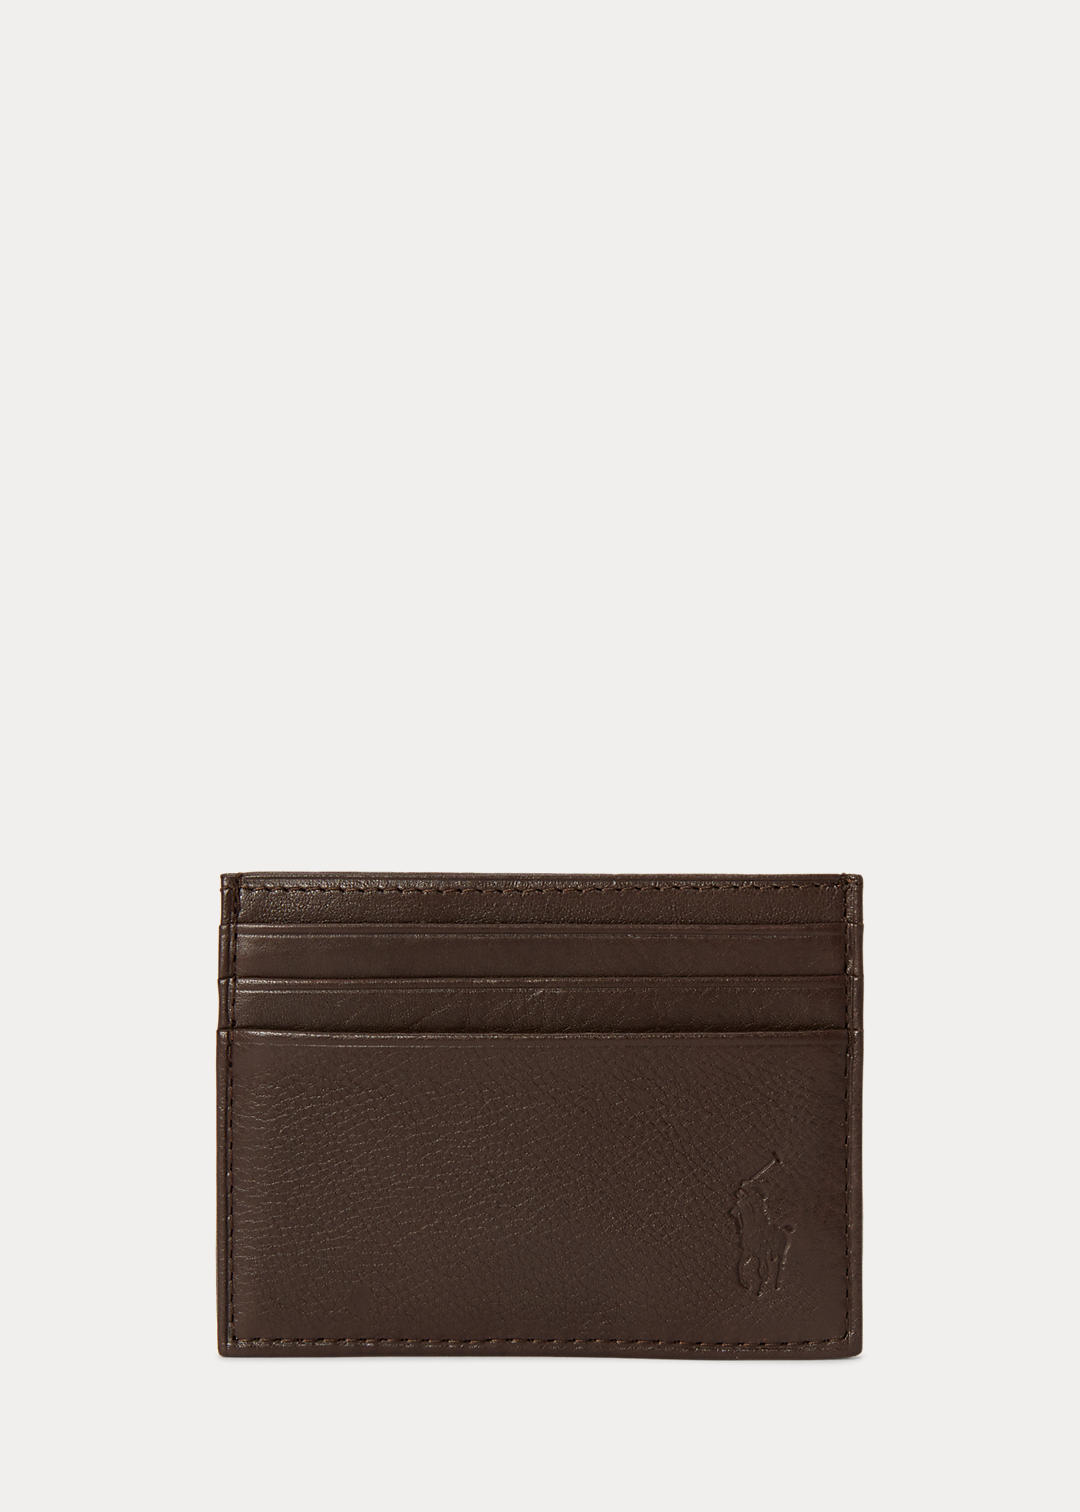 Polo Ralph Lauren Pebble Leather Card Case 1